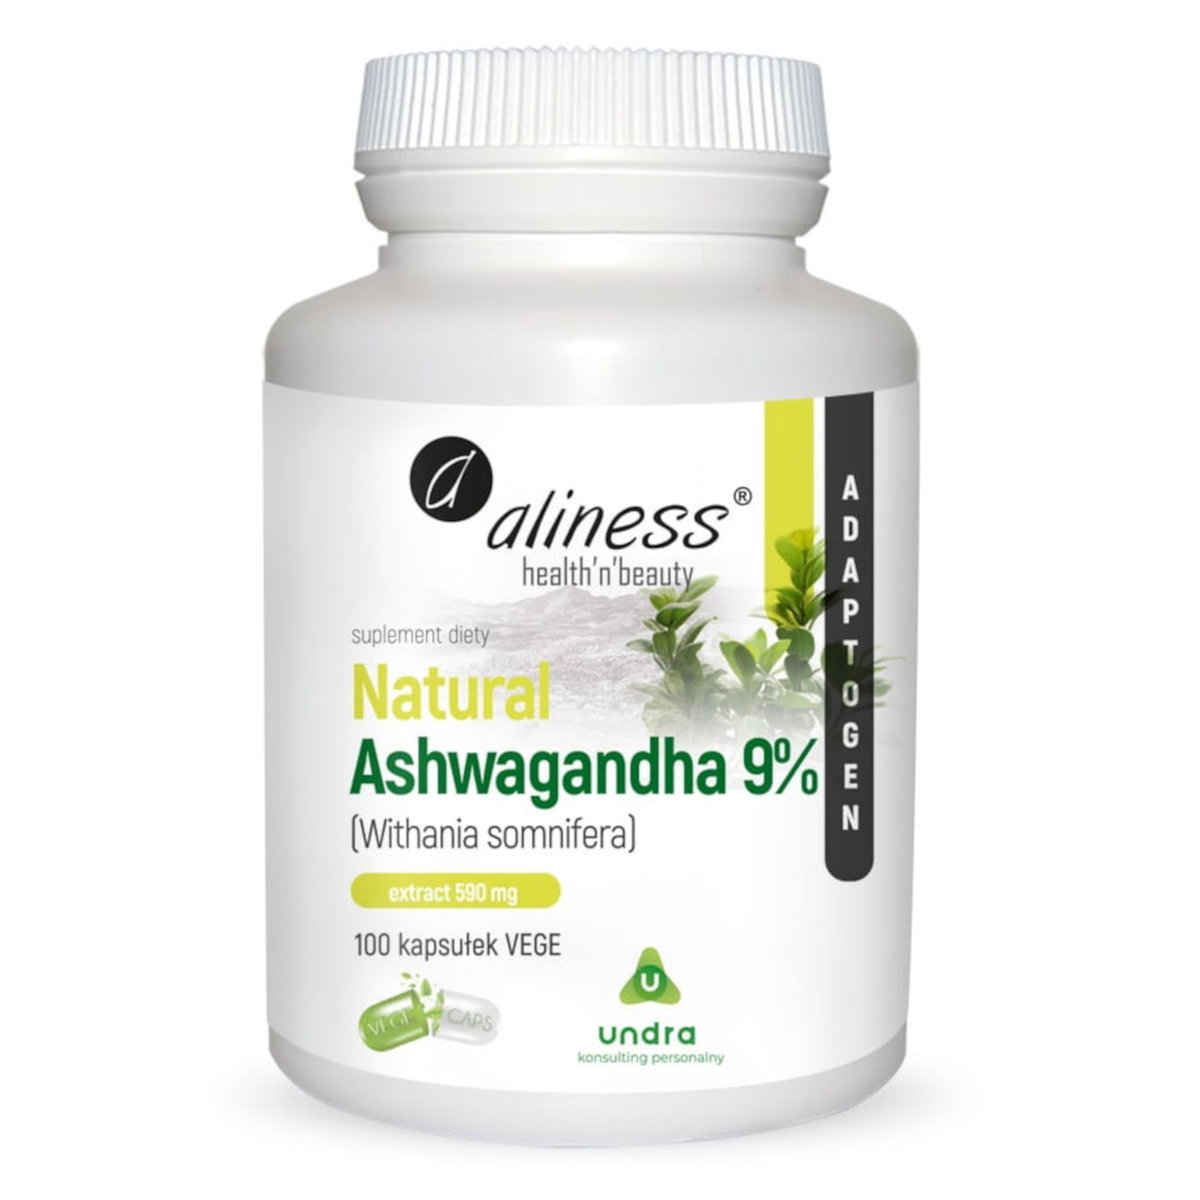 Фото - Вітаміни й мінерали Aliness Ashwagandha 9 Extract 590 mg Suplement diety, 100 kaps. VEGE 